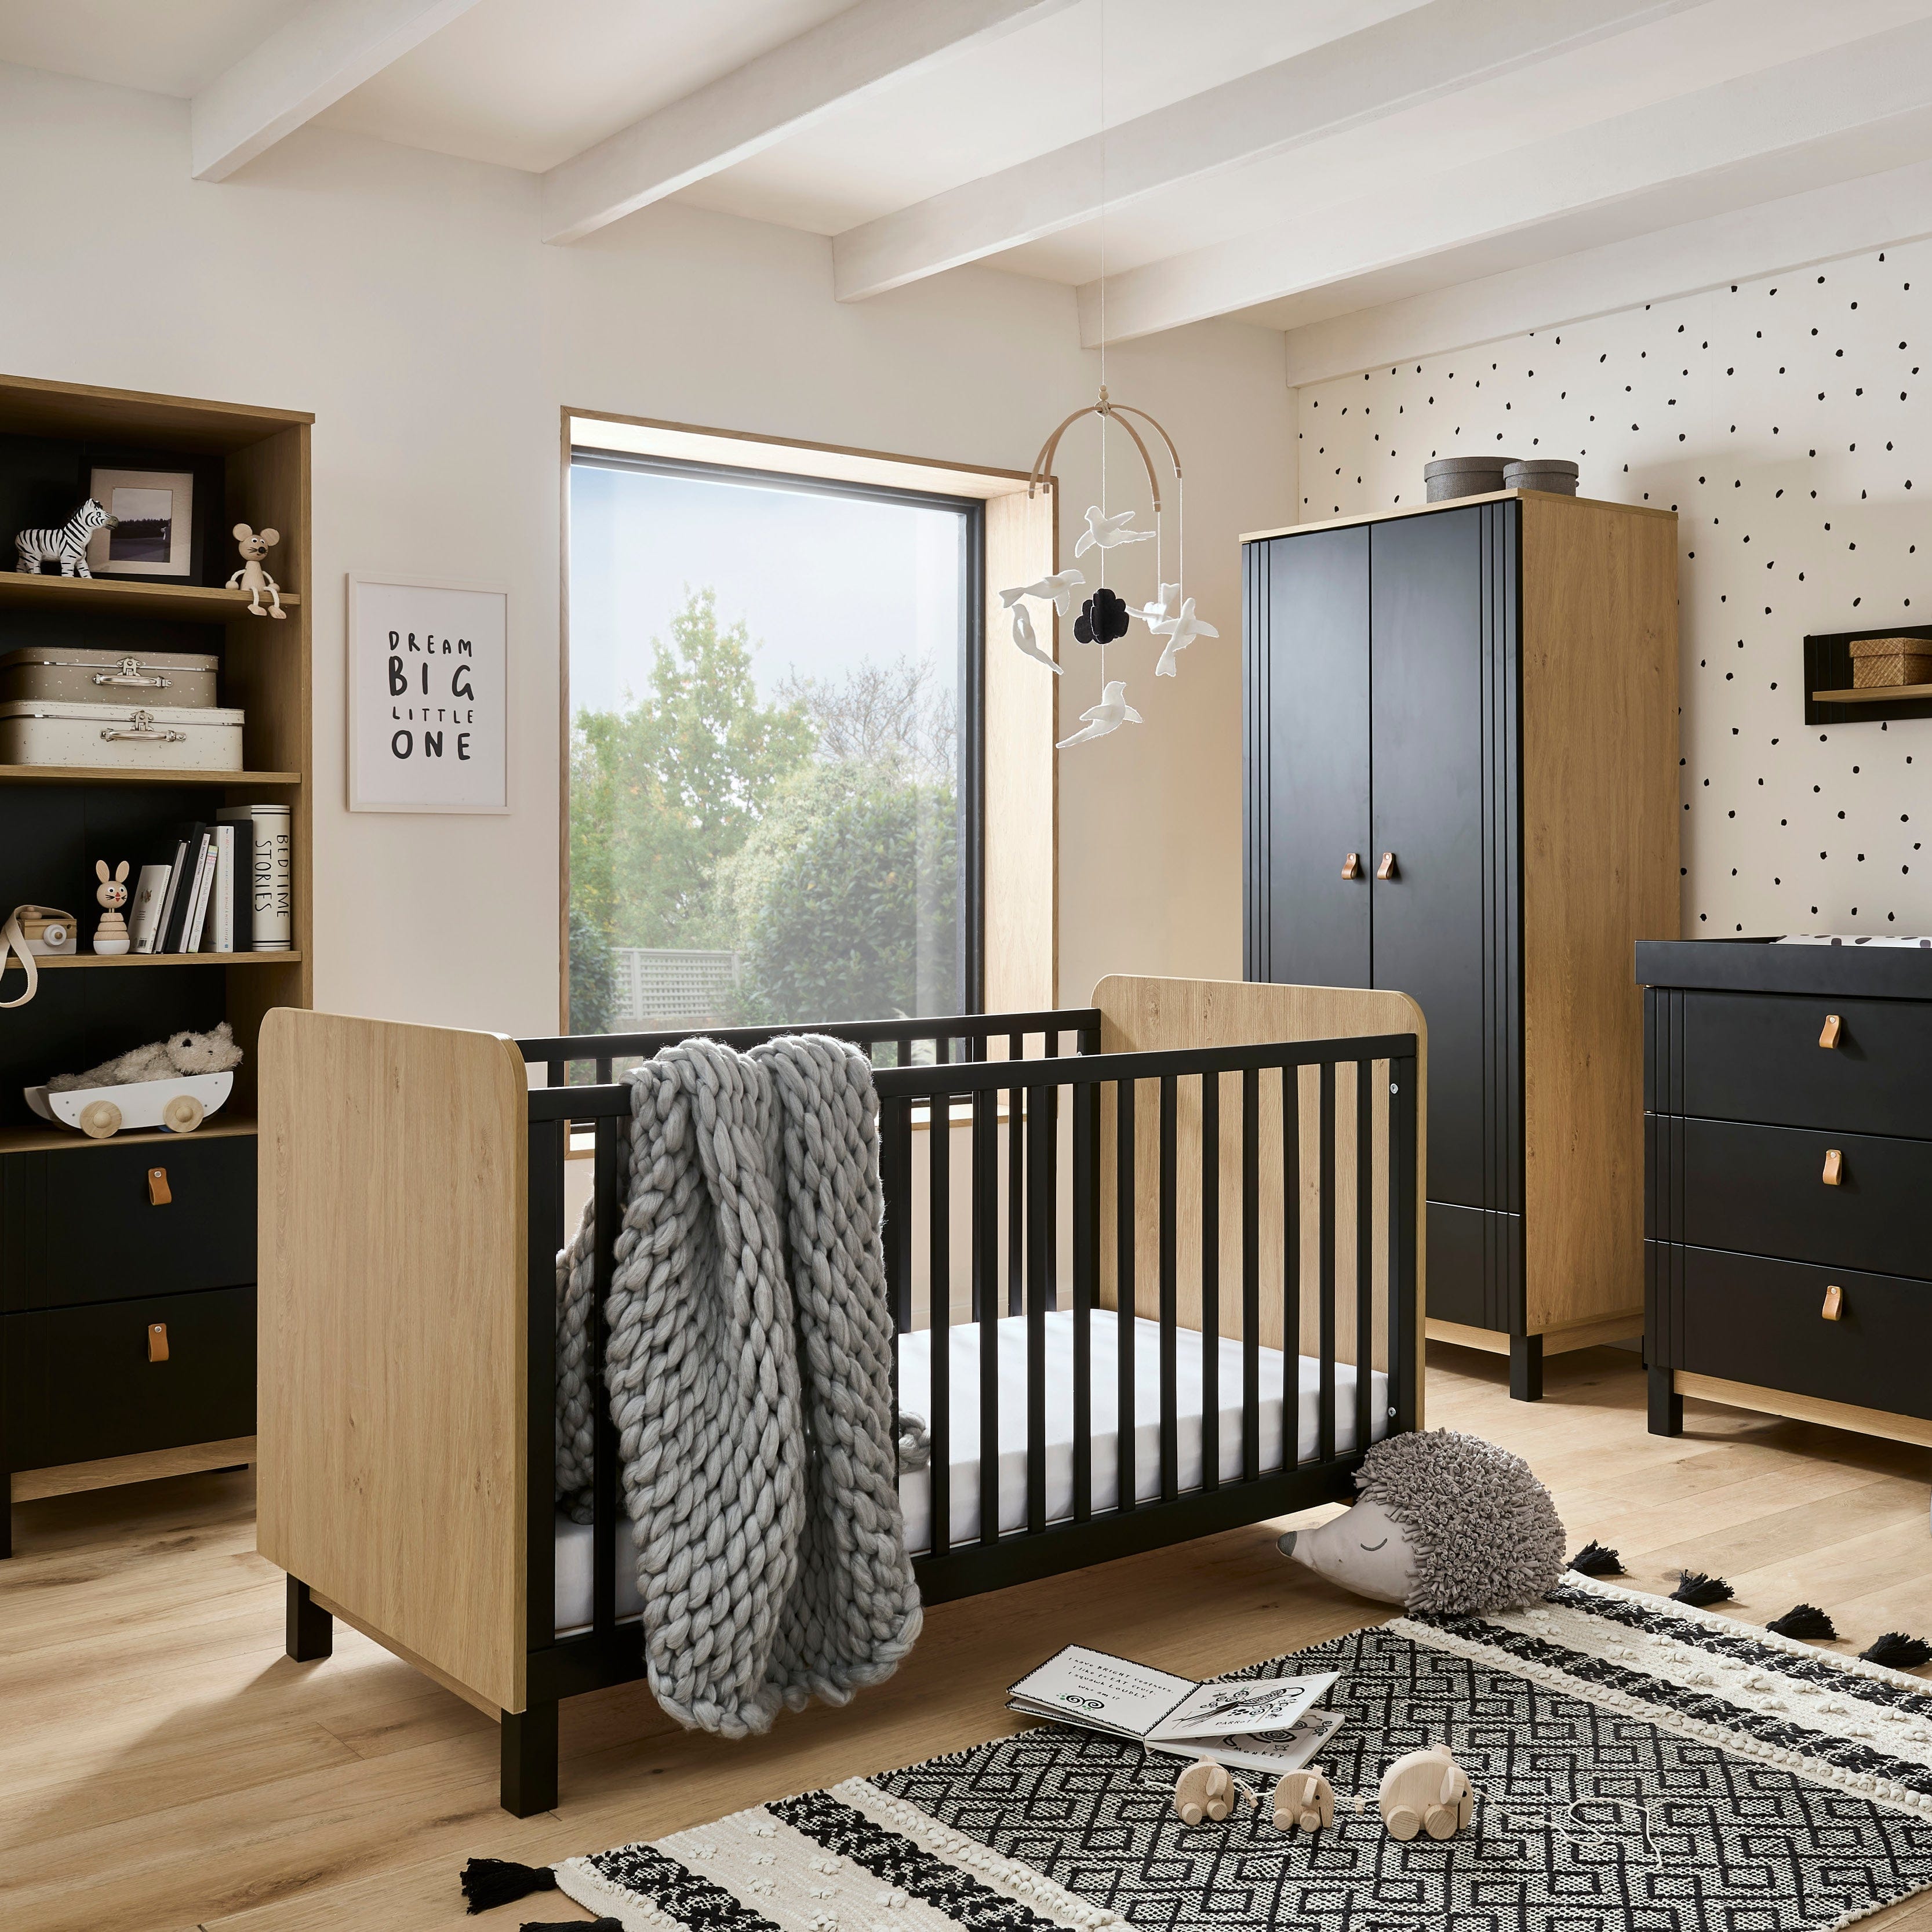 CuddleCo Nursery Room Sets CuddleCo Rafi 4 Piece Room Set in Oak/Black